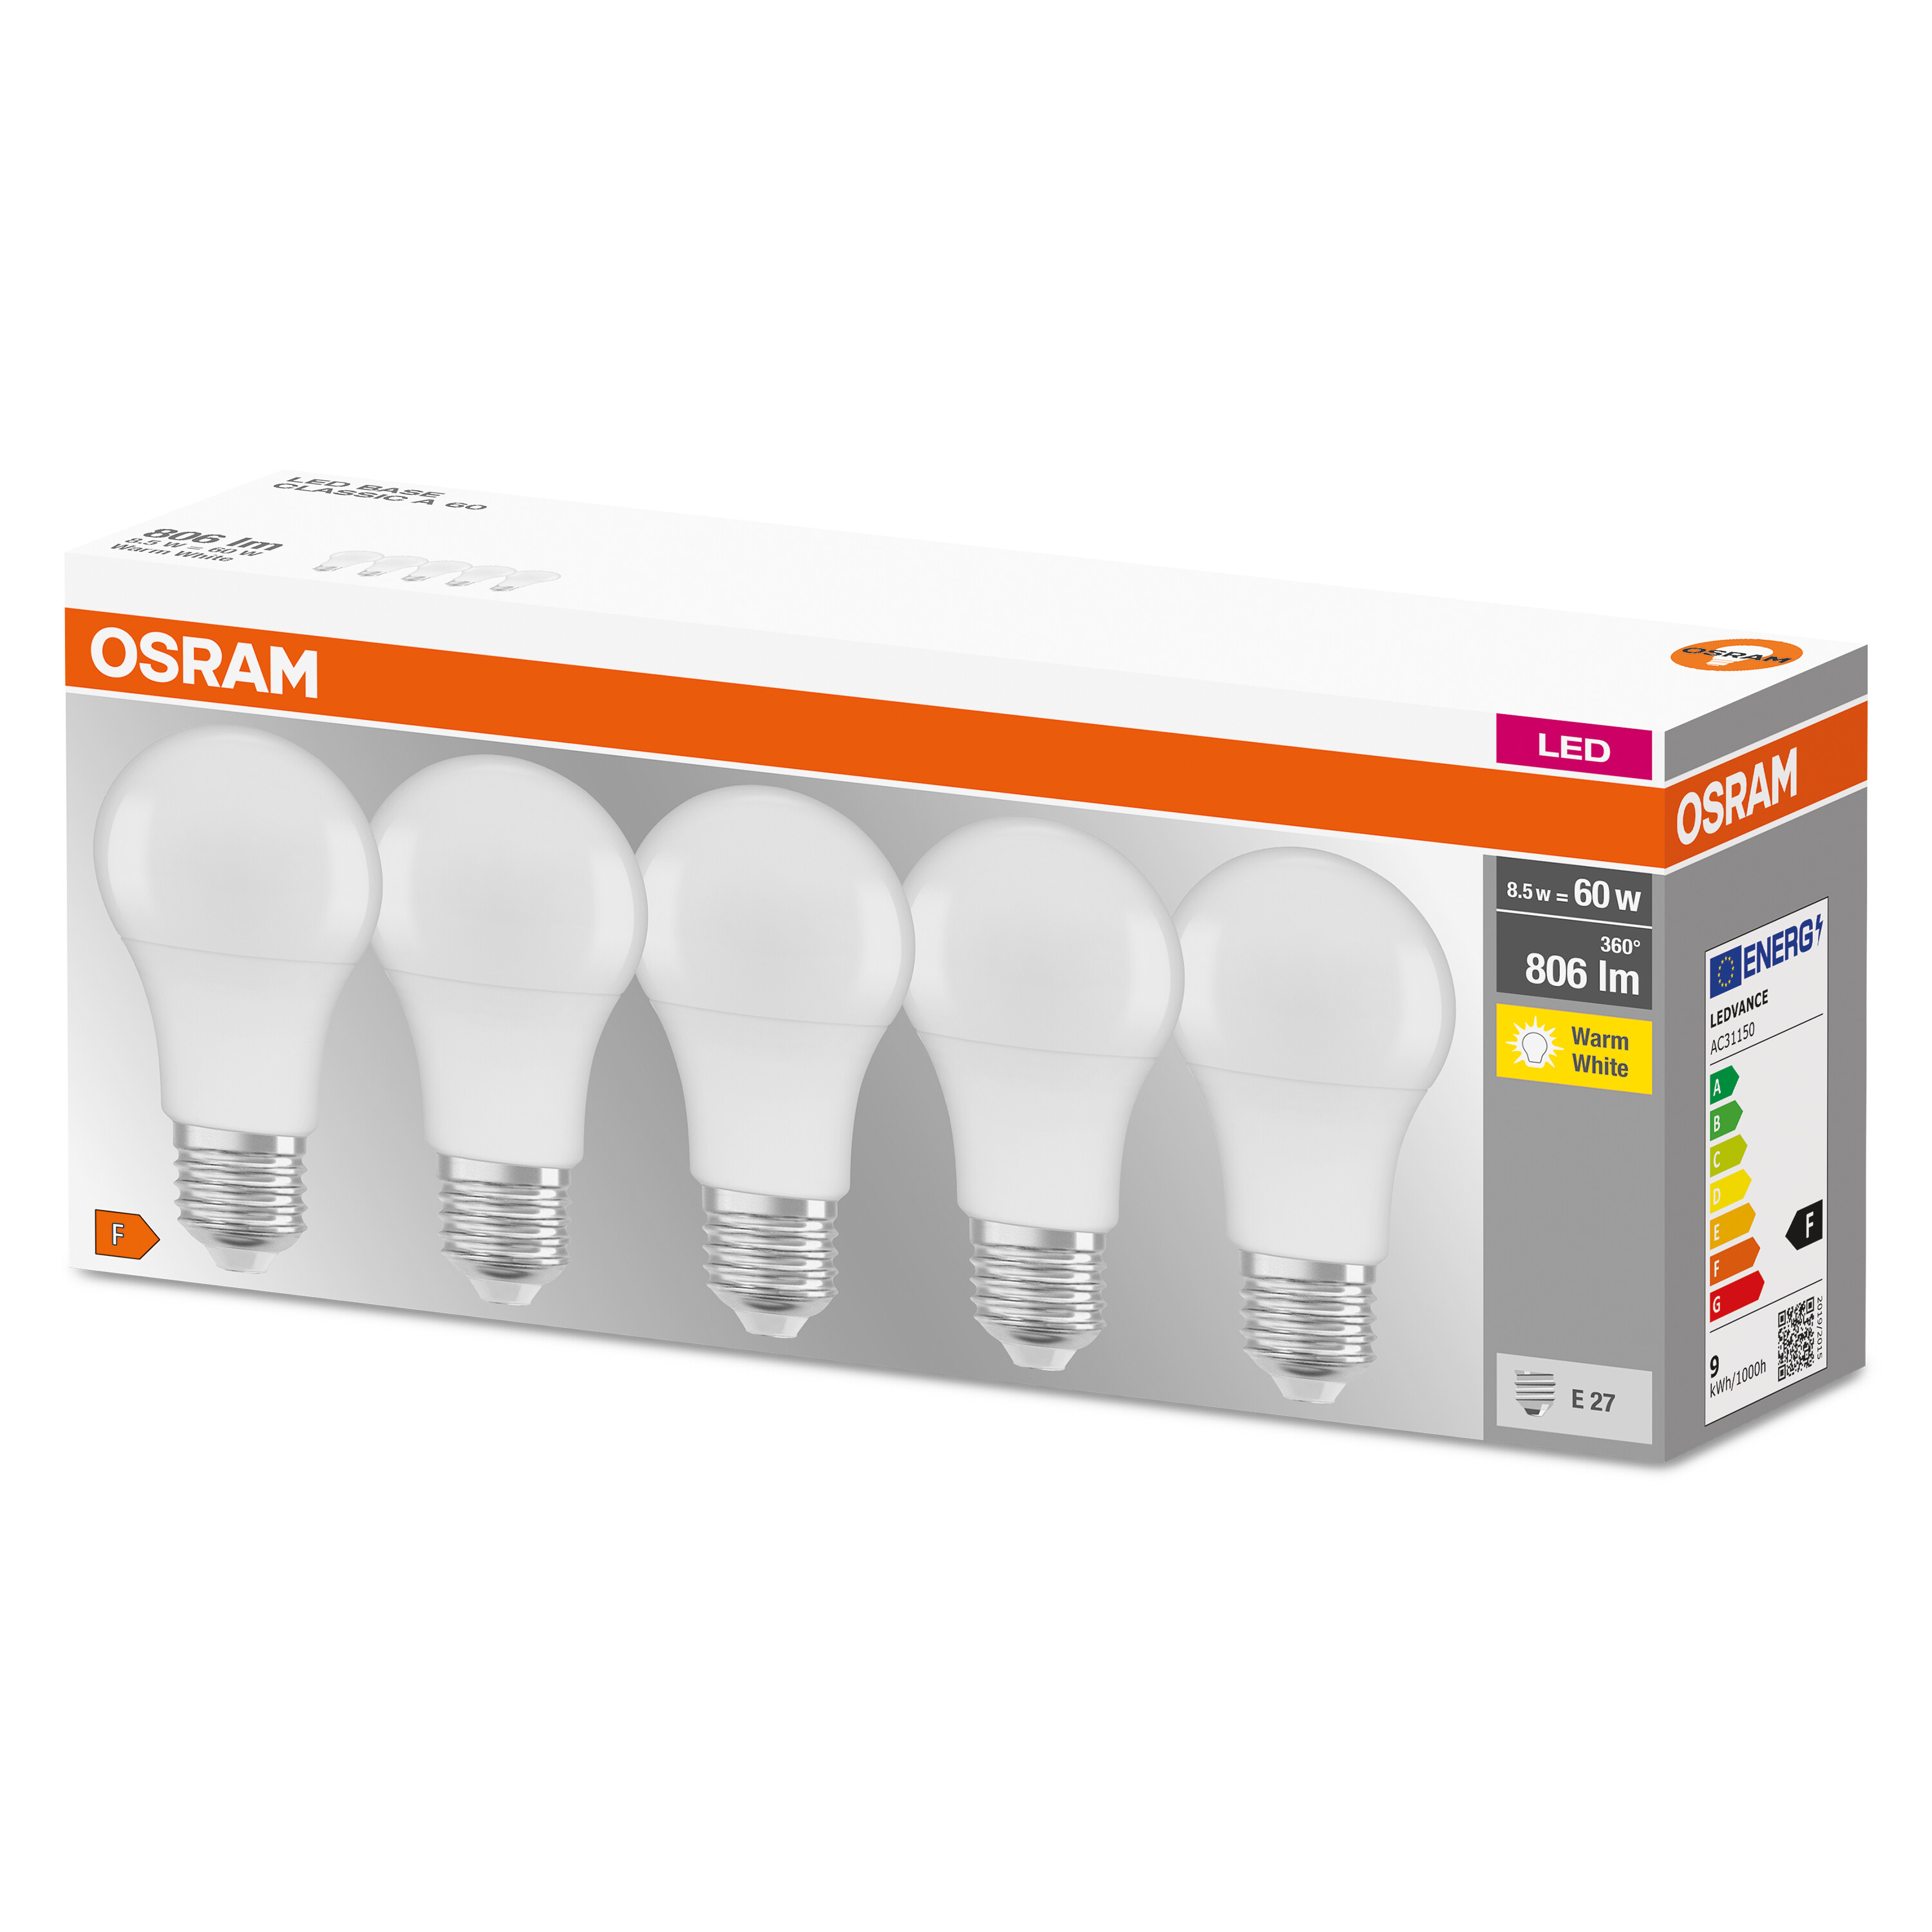 FR 8.5 LED Lumen CLASSIC OSRAM  BASE Warmweiß W/2700 60 E27 A Lampe LED 806